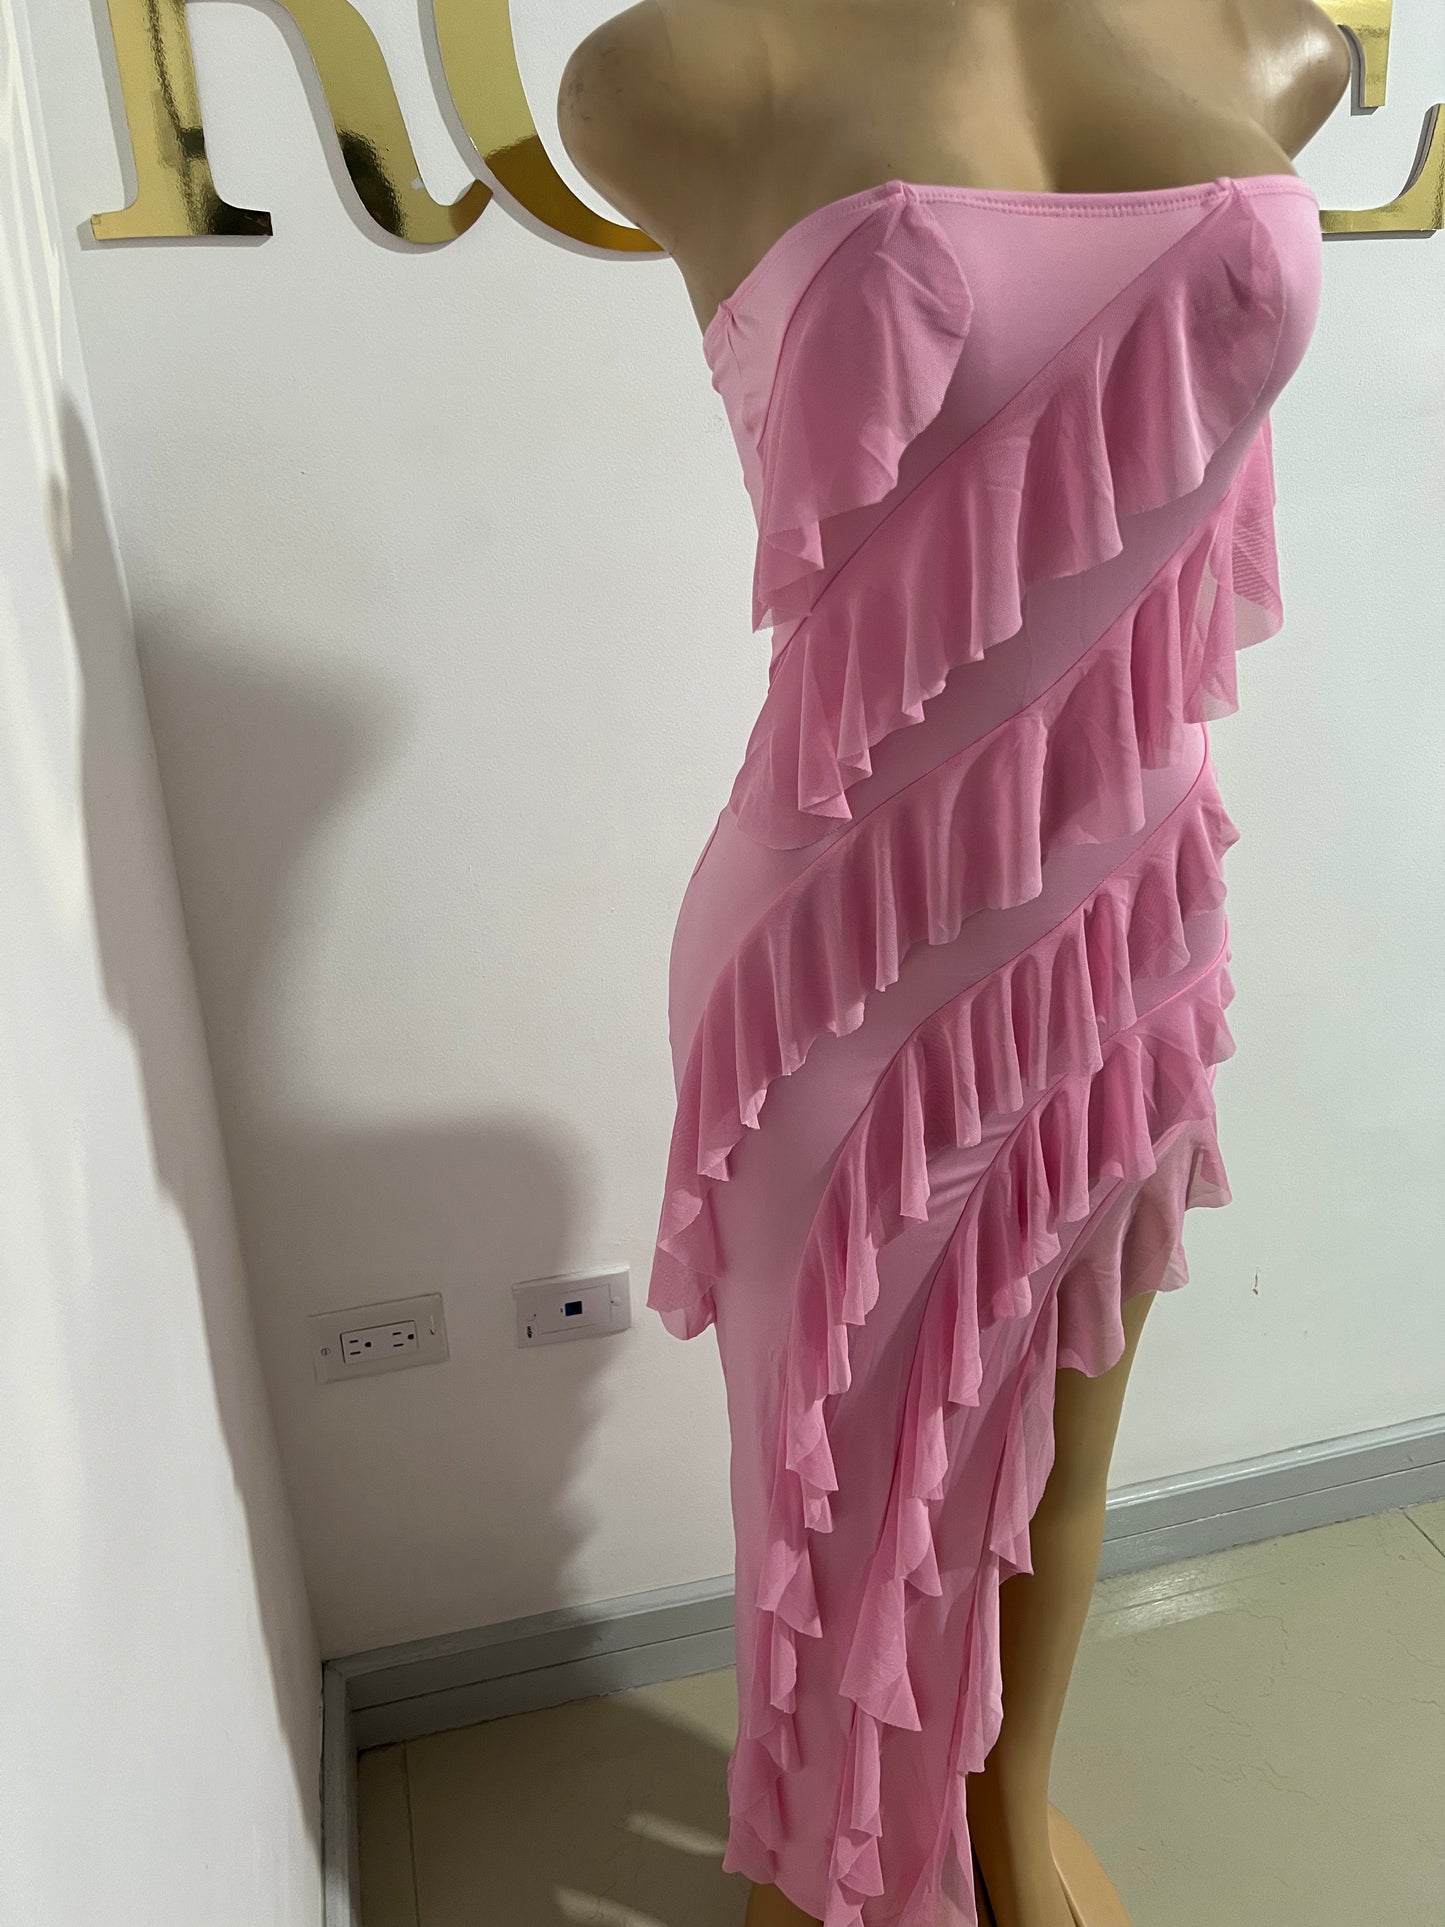 Chelsea Ruffle Dress (Pink)